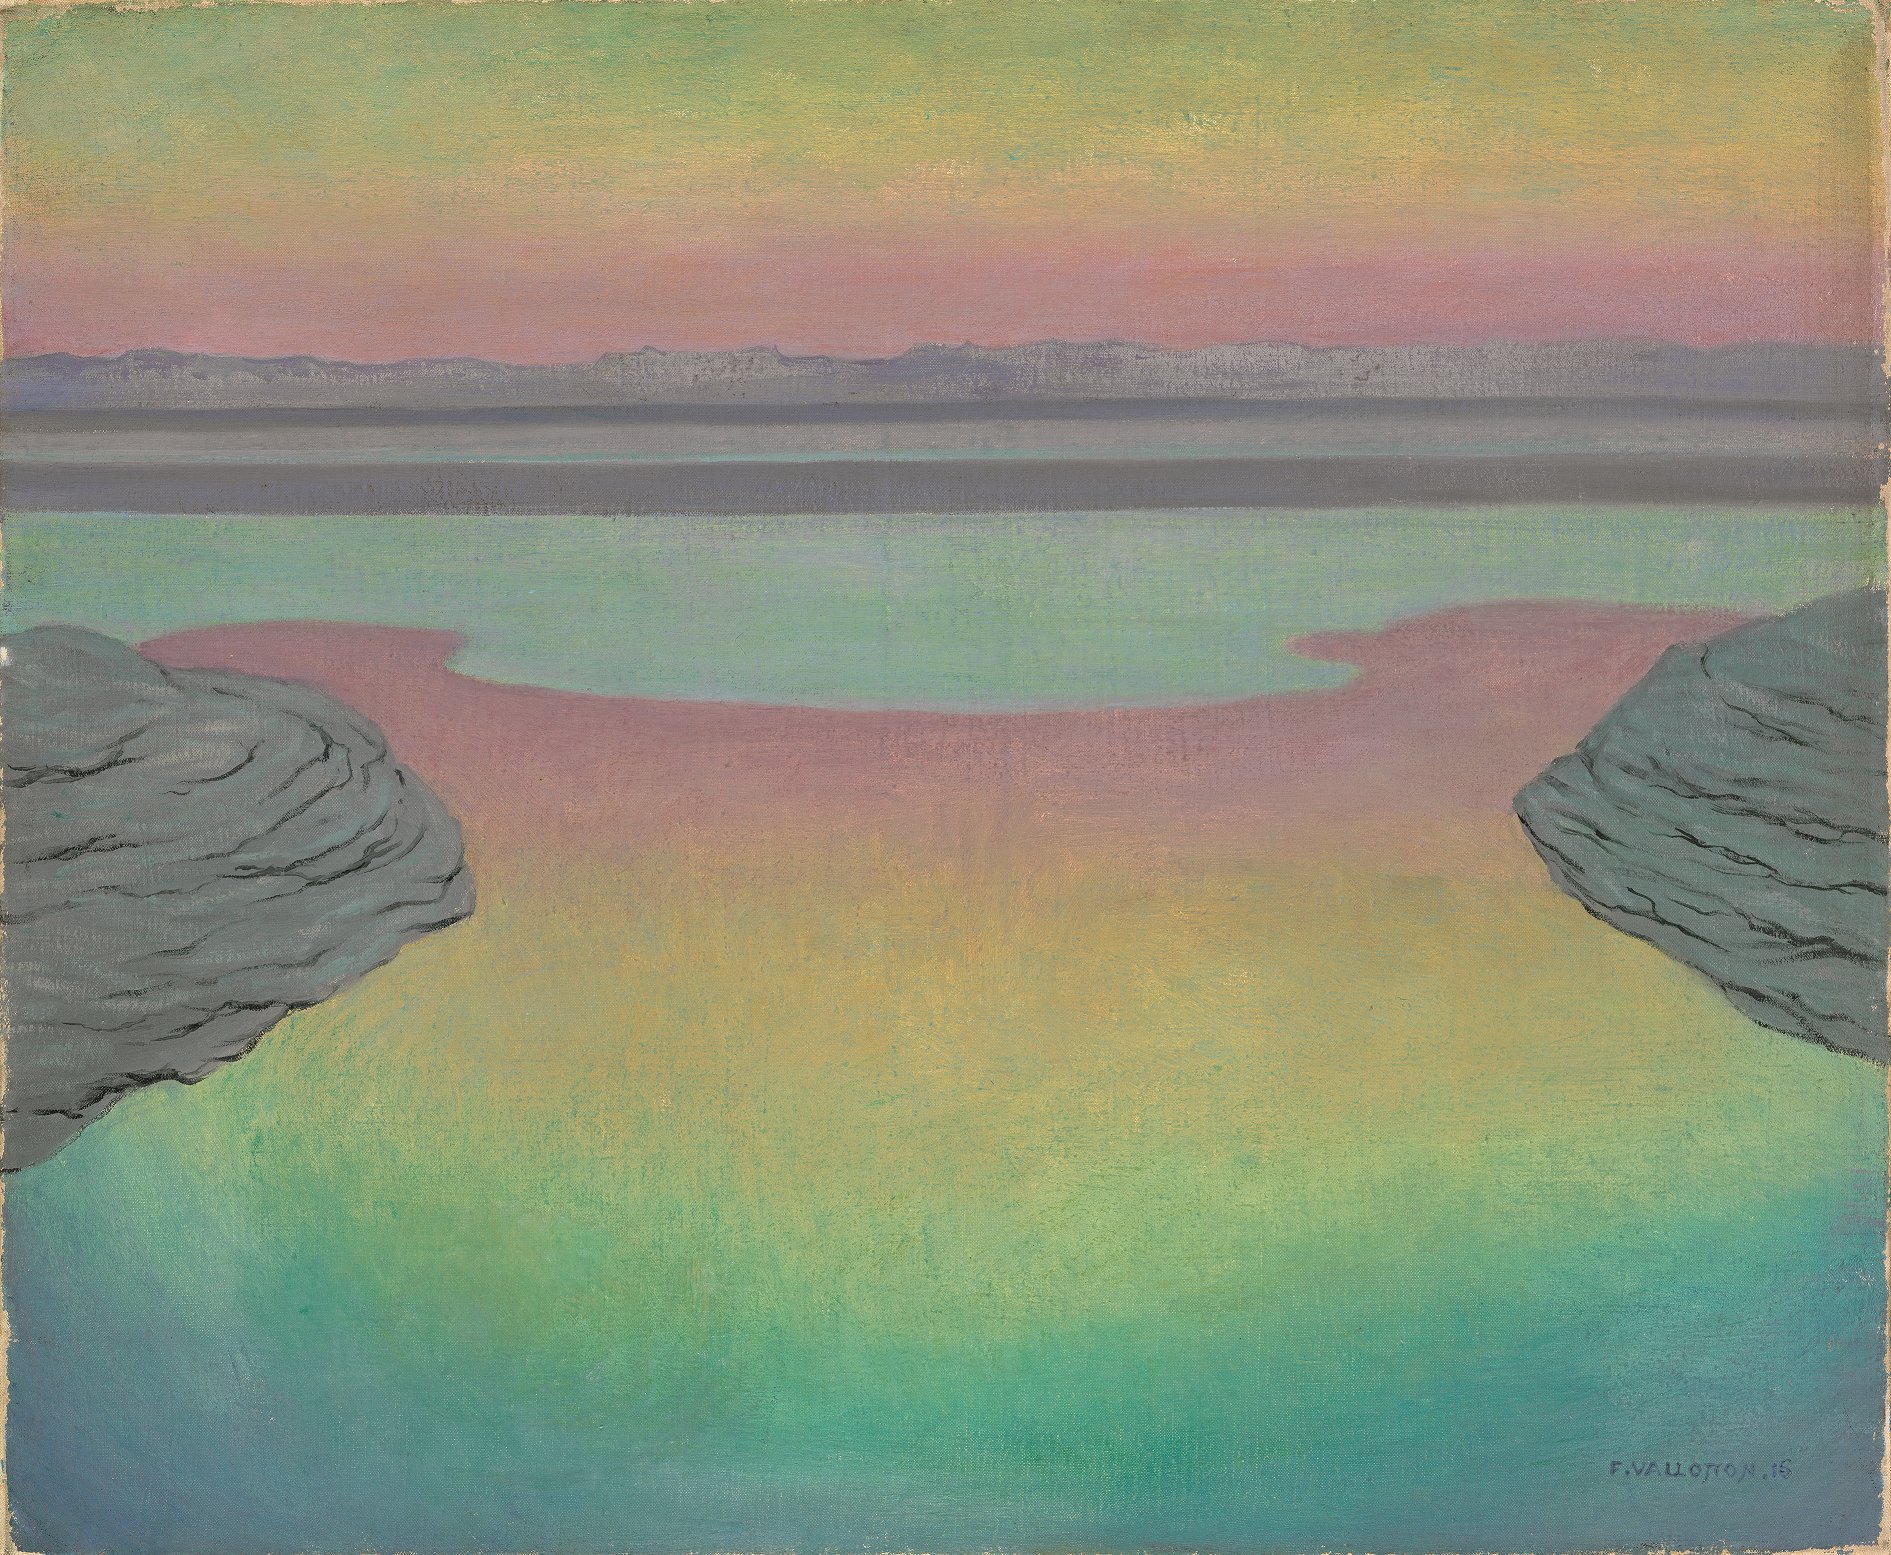 High Tide in Evening Light by Félix Vallotton - 1915 - 61 × 73 cm Fondation Pierre Gianadda